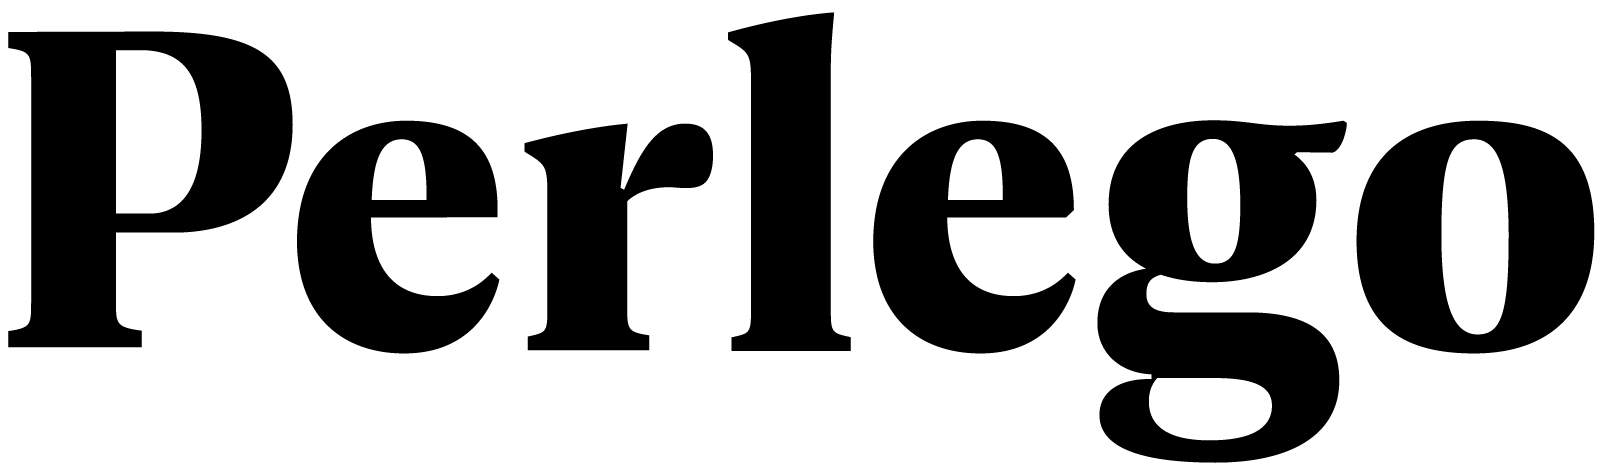 Perlego logo